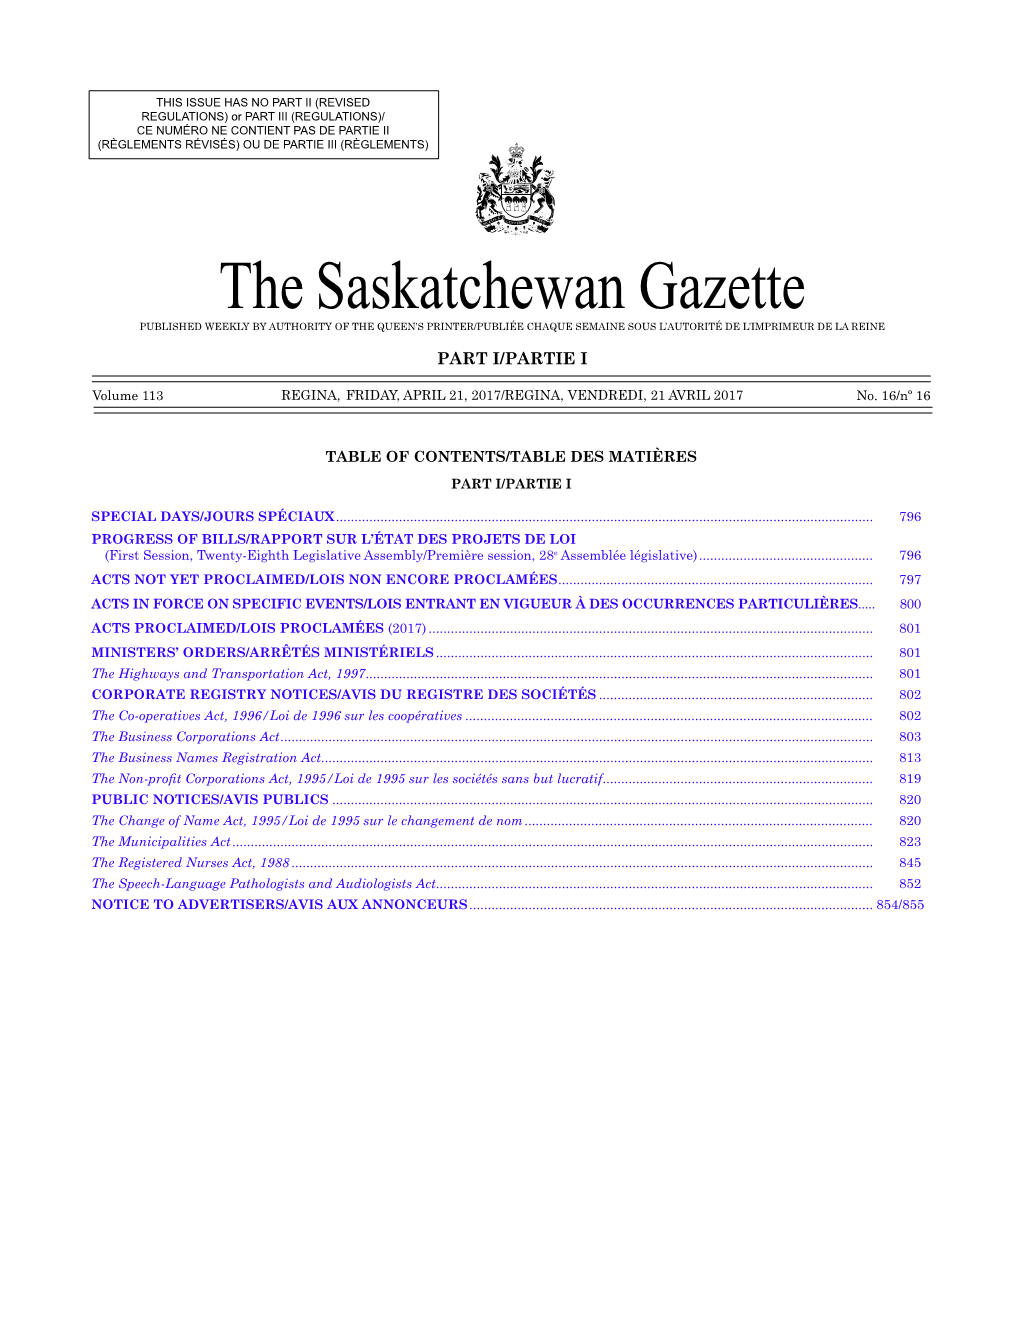 The Saskatchewan Gazette, 21 Avril 2017